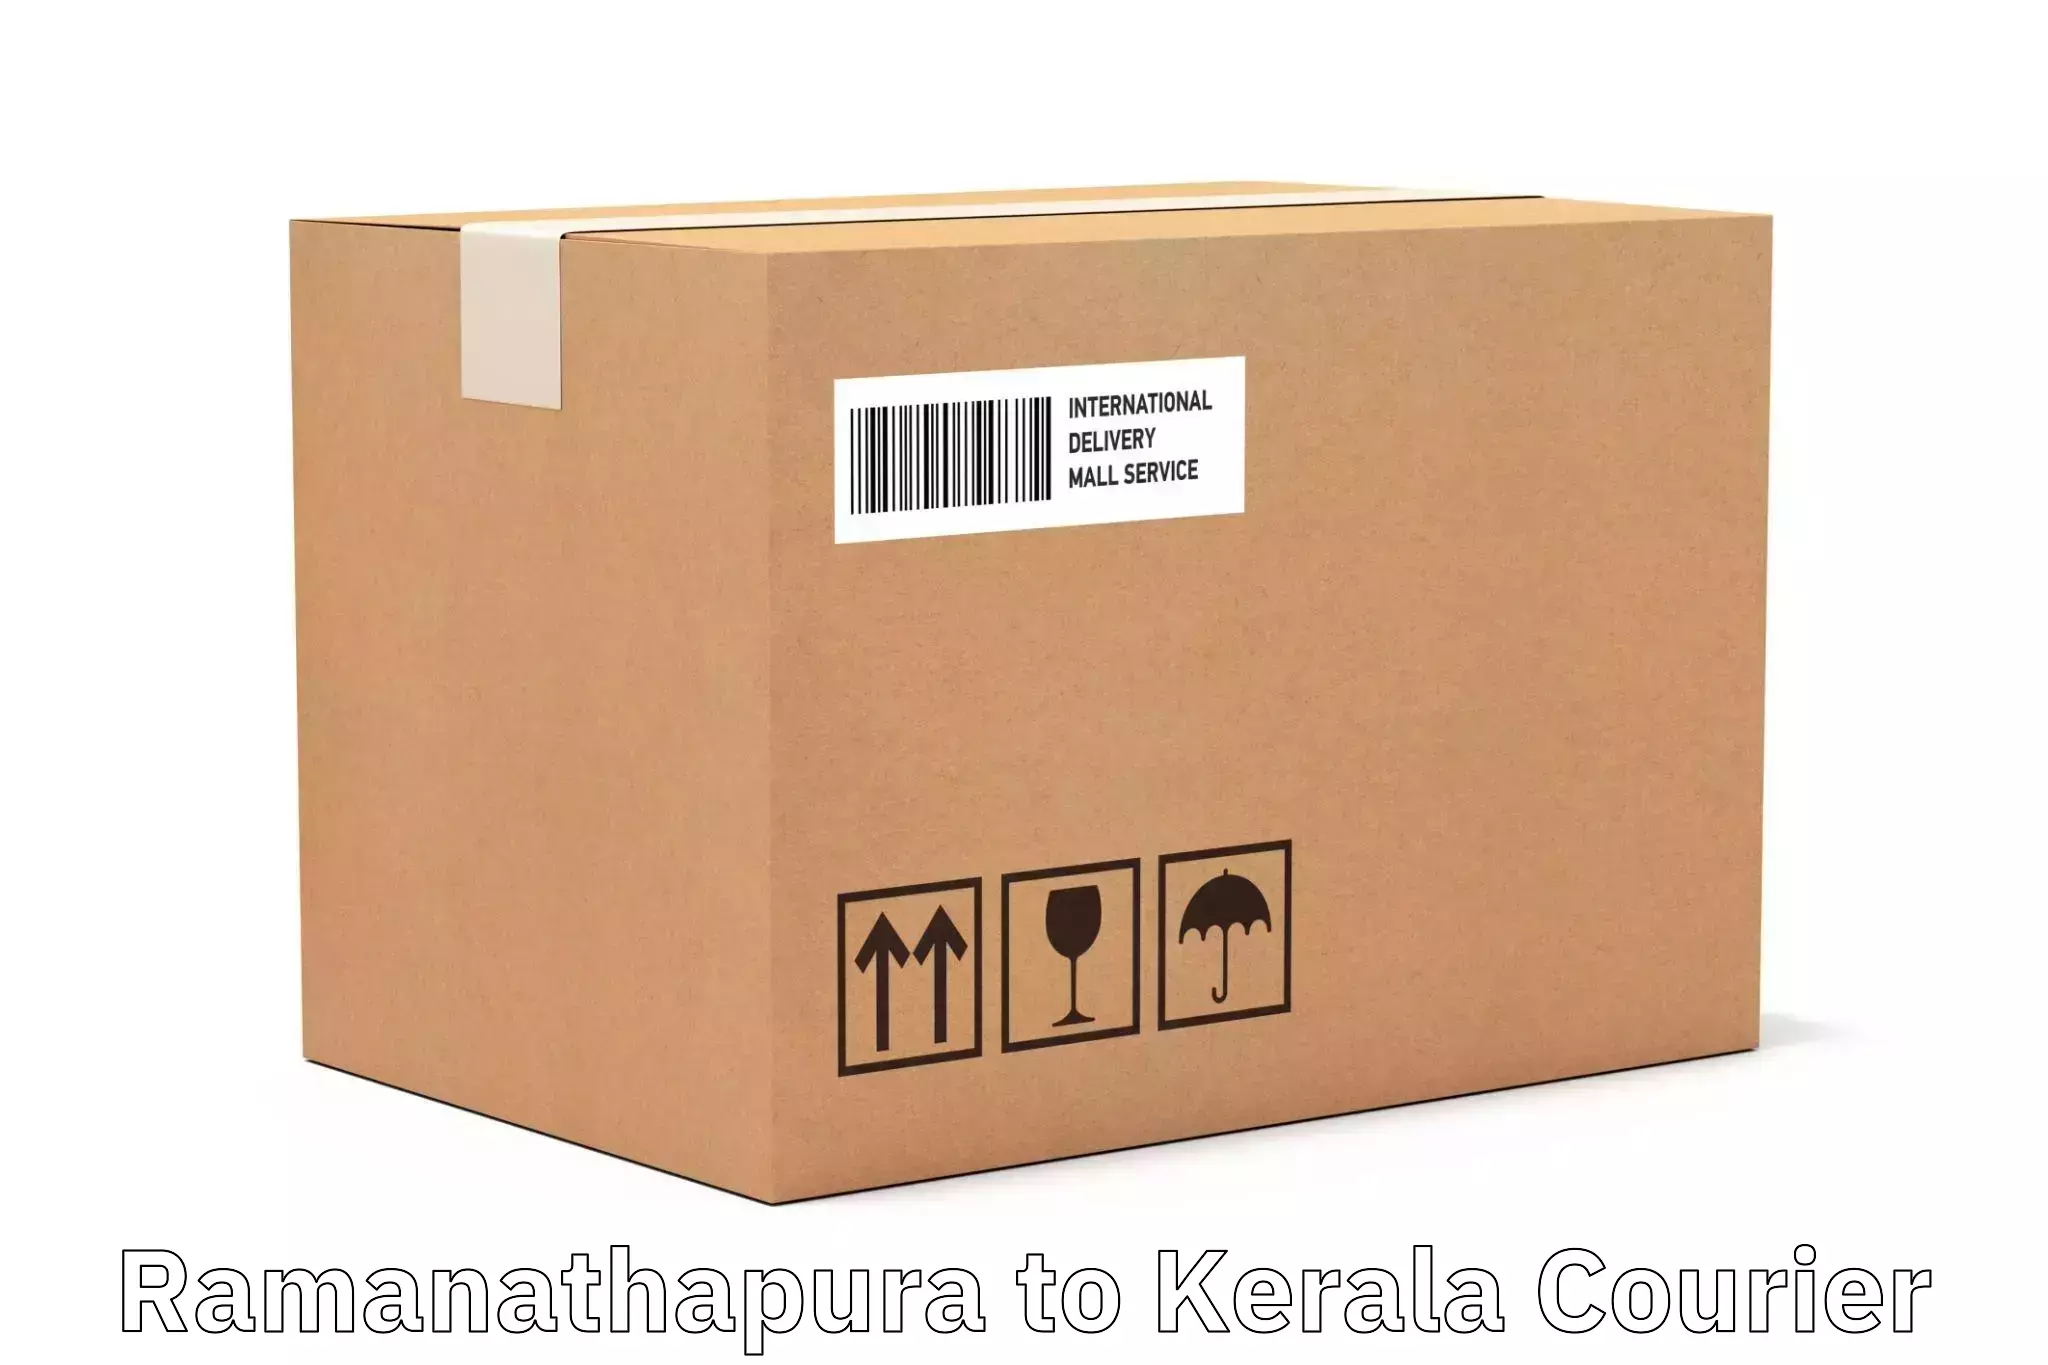 Affordable parcel rates Ramanathapura to Trivandrum